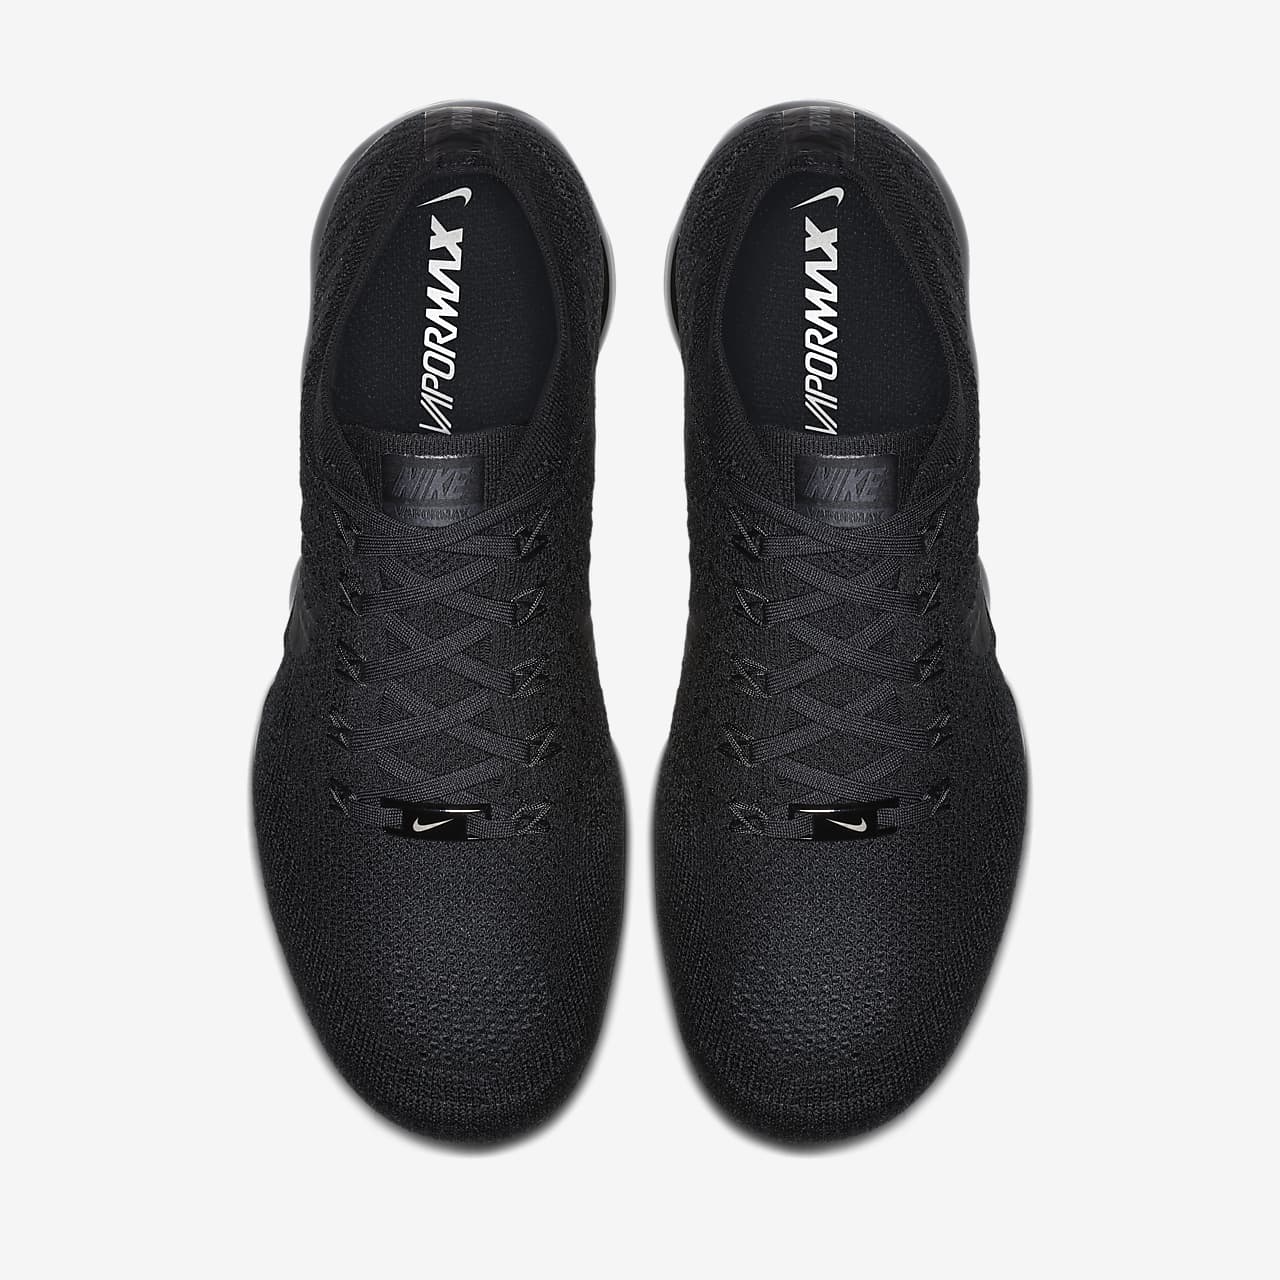 men's nike air vapormax flyknit running shoes